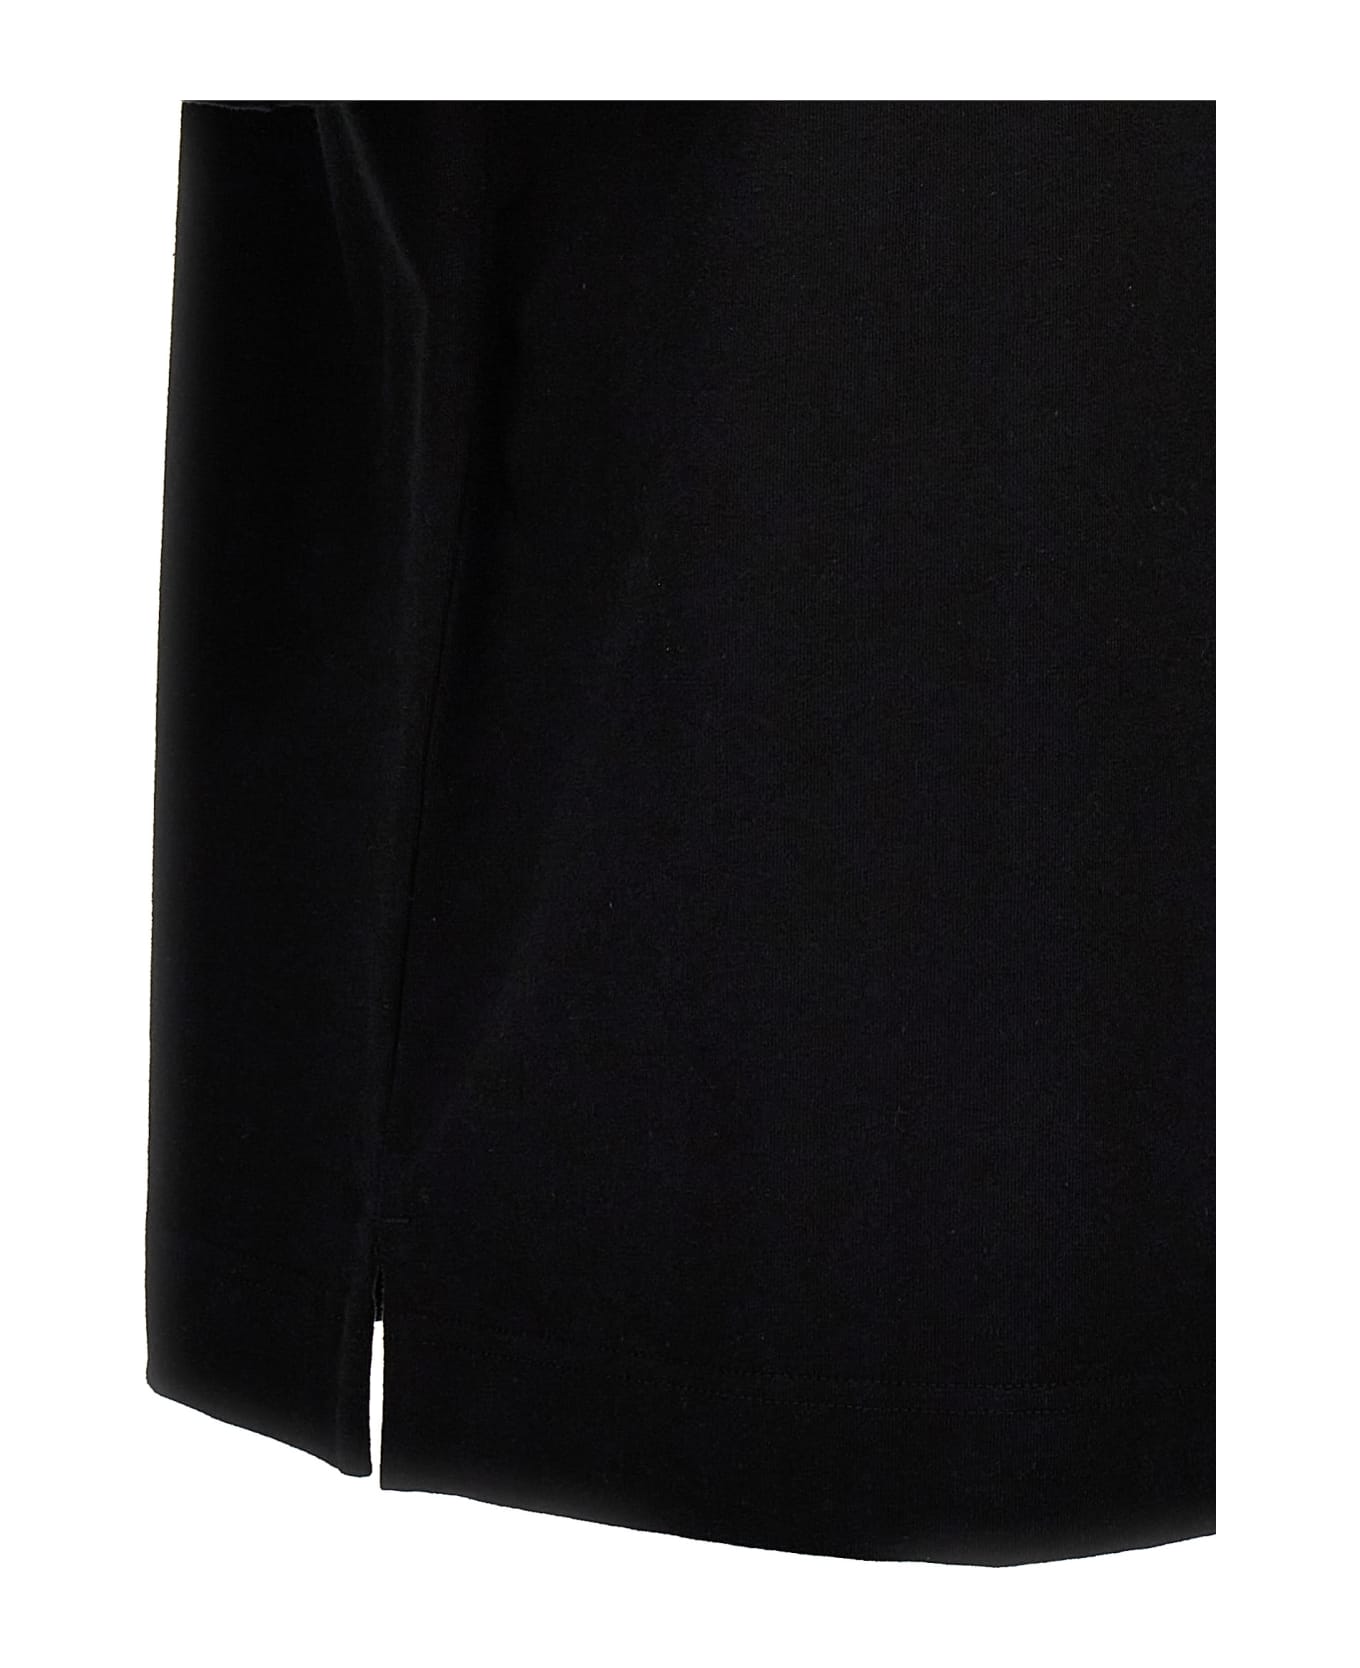 Lemaire Pocket T-shirt - BLACK